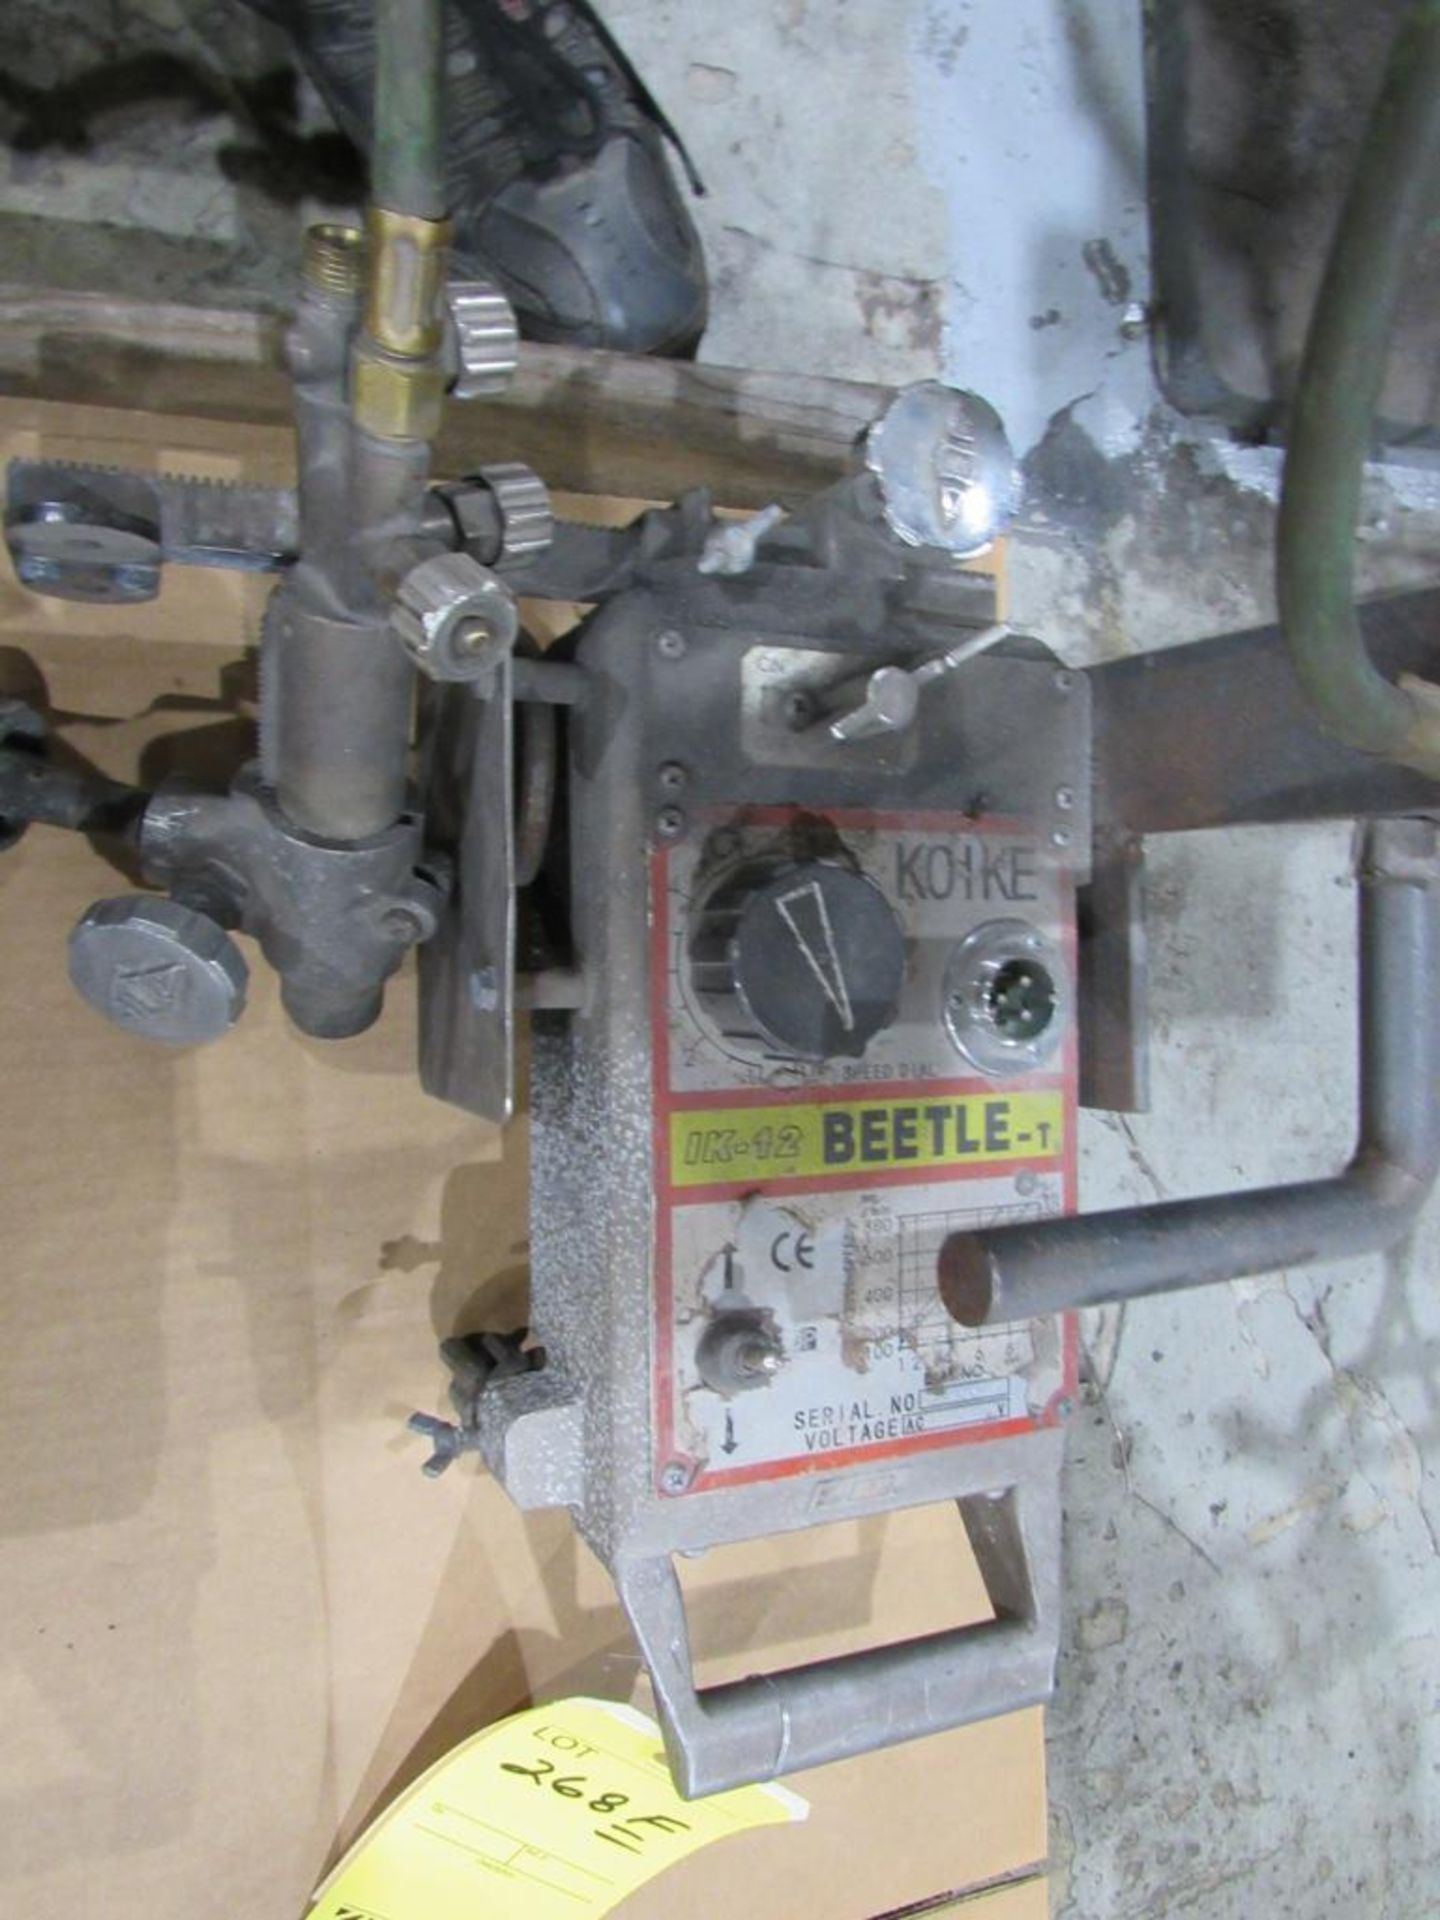 Koike IK-12 Beetle-T Motorized Torch Cutting Machine - Image 2 of 3